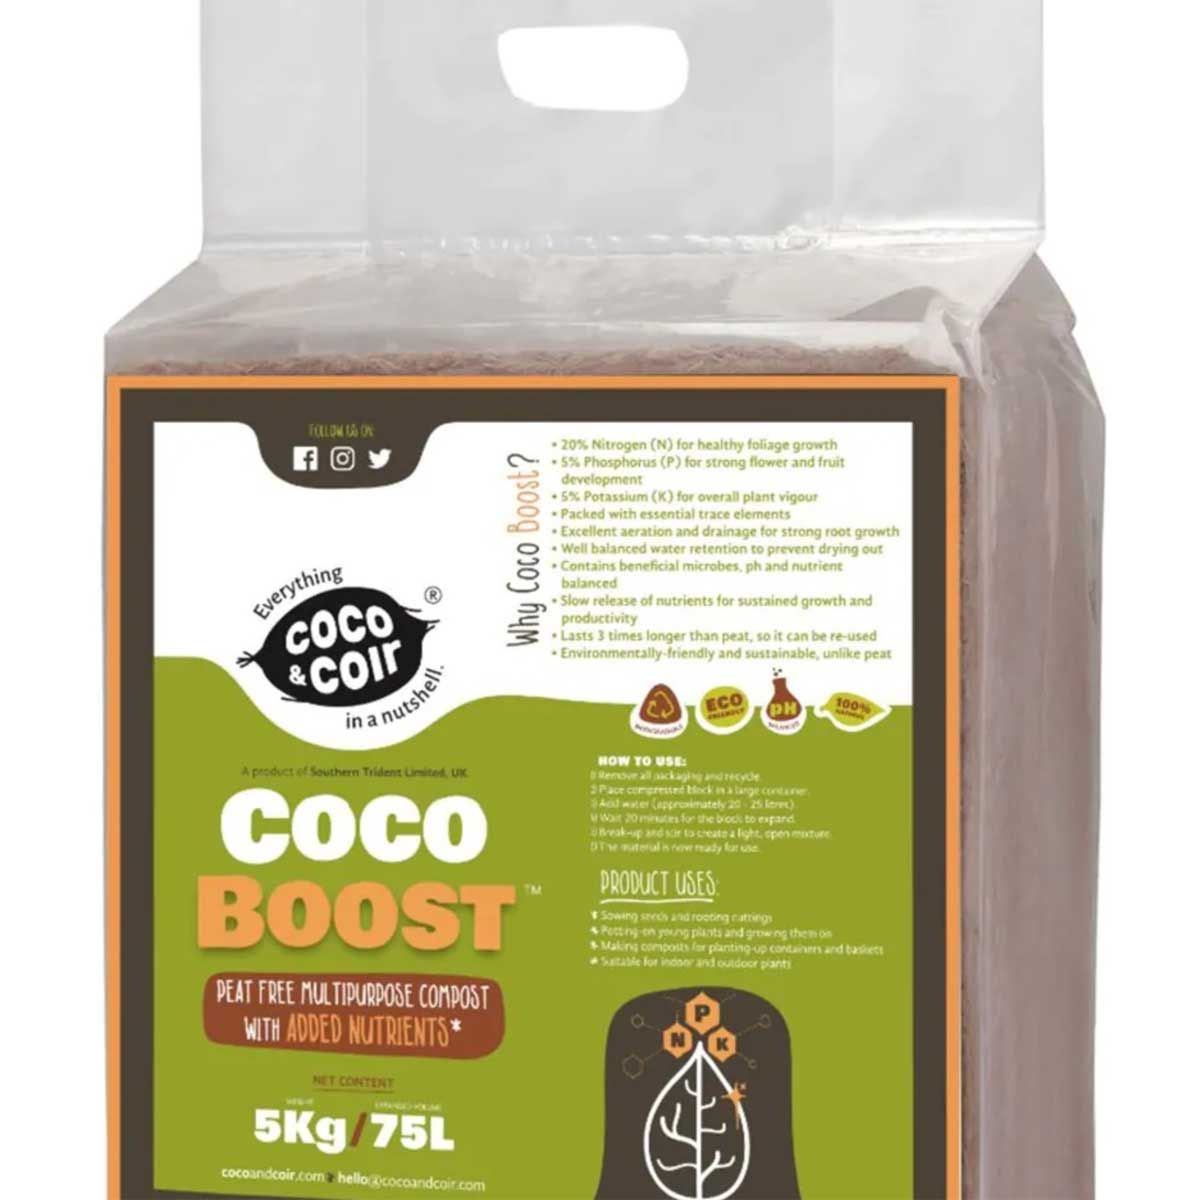 Coco Boost peat-free compost